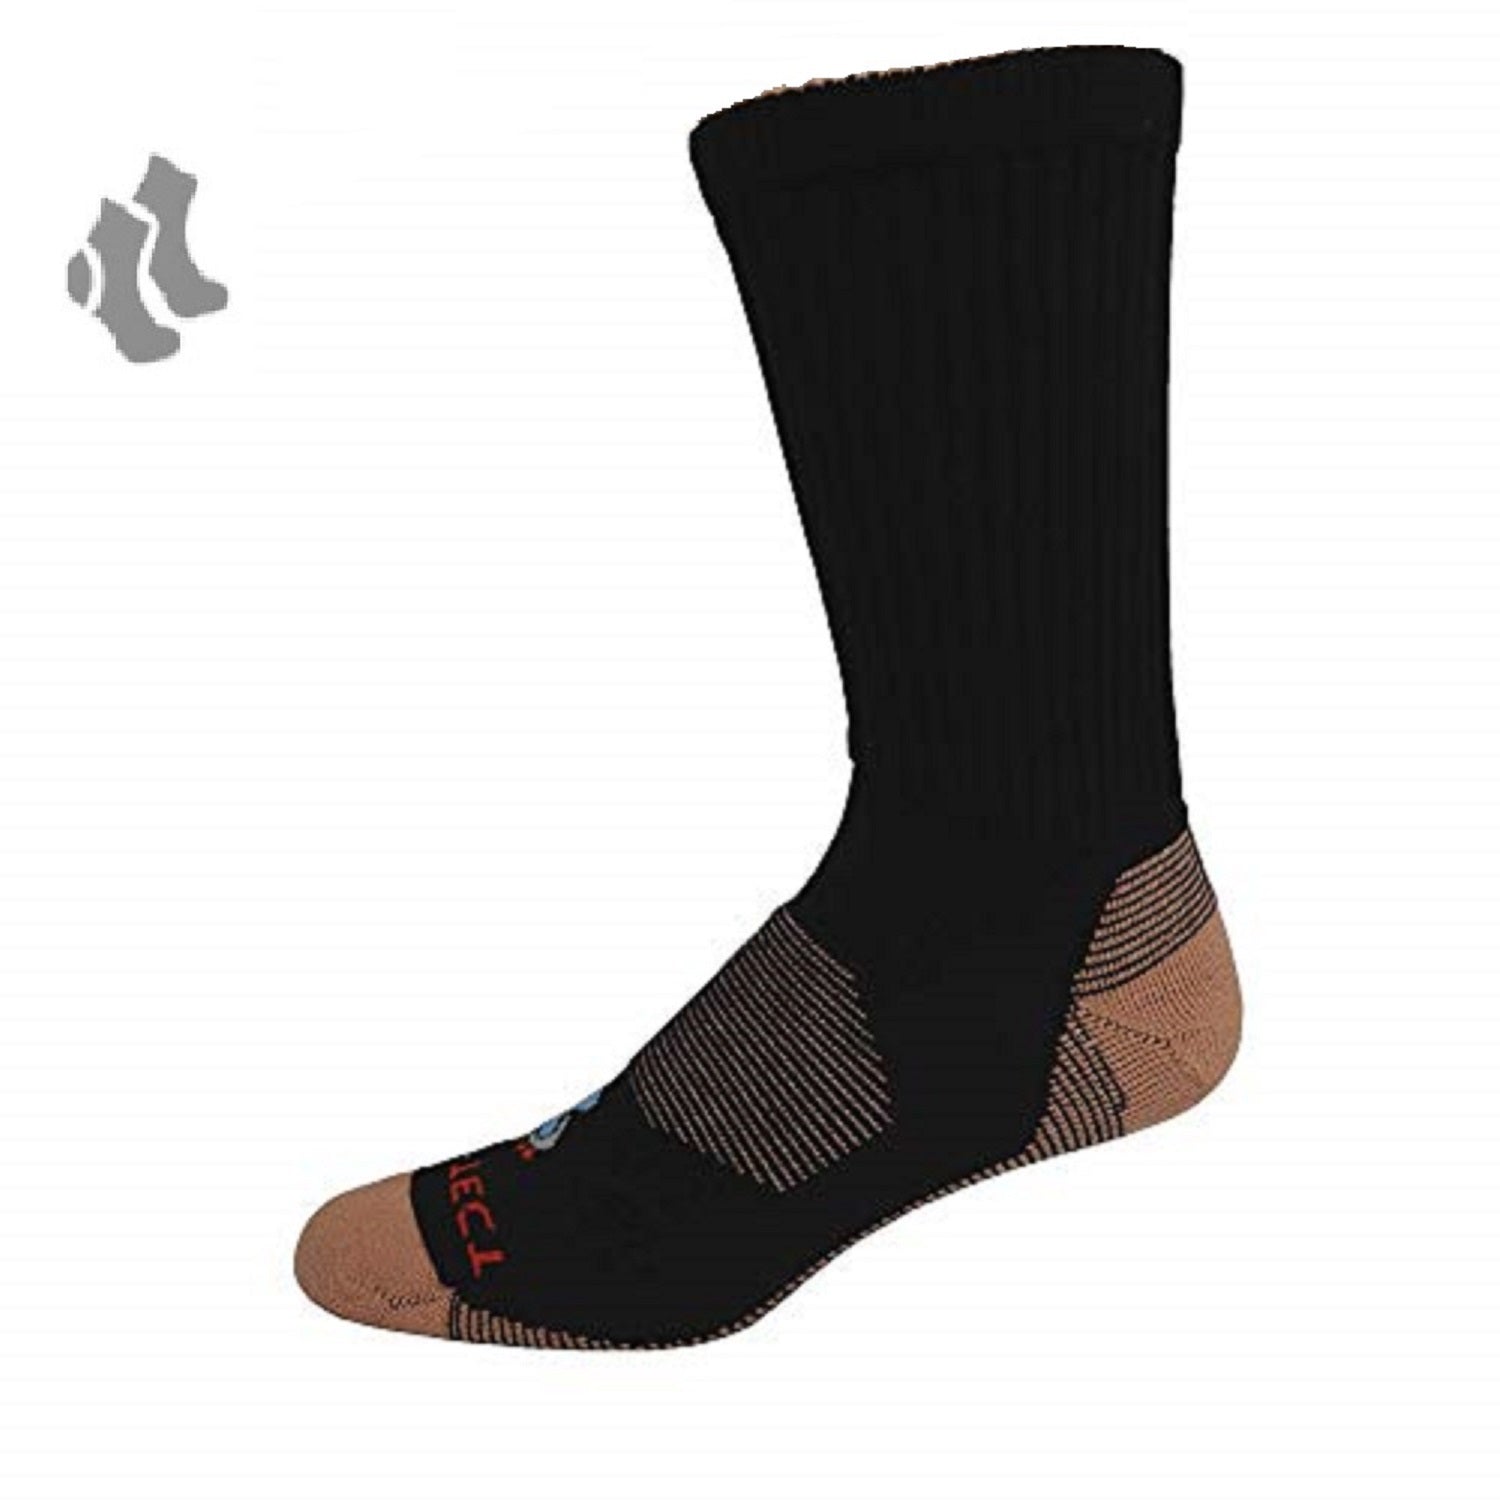 Black Quarter Cut Copper Diabetic Socks - 2 Pairs - Pro-Tect